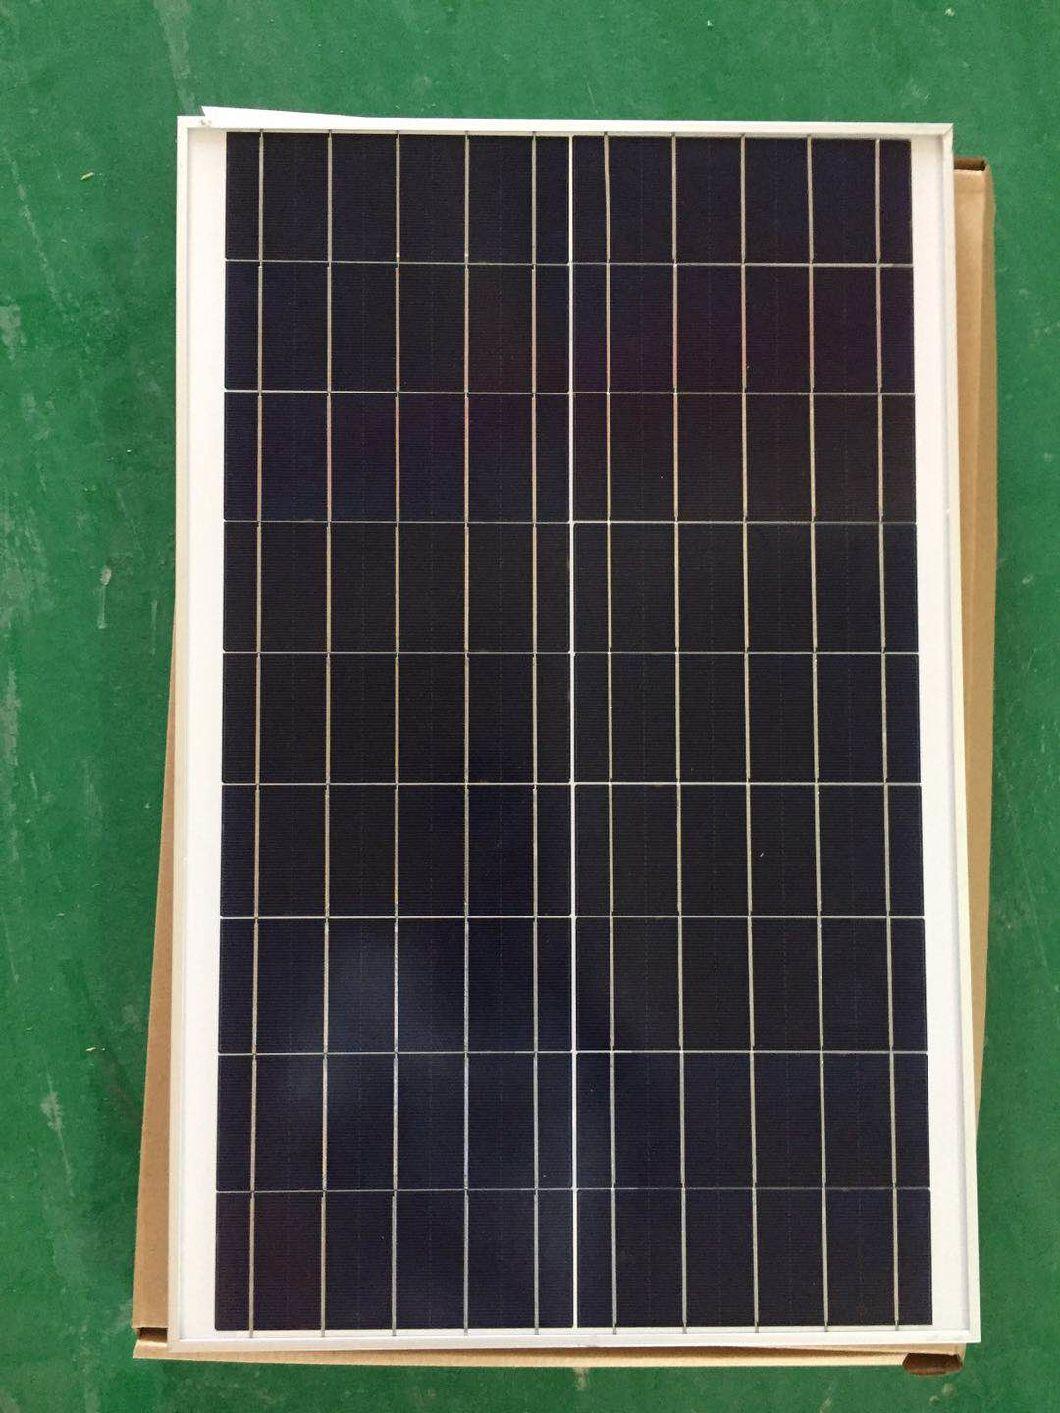 90W 150W Split Solar Panel LED Street Light with Remote Control